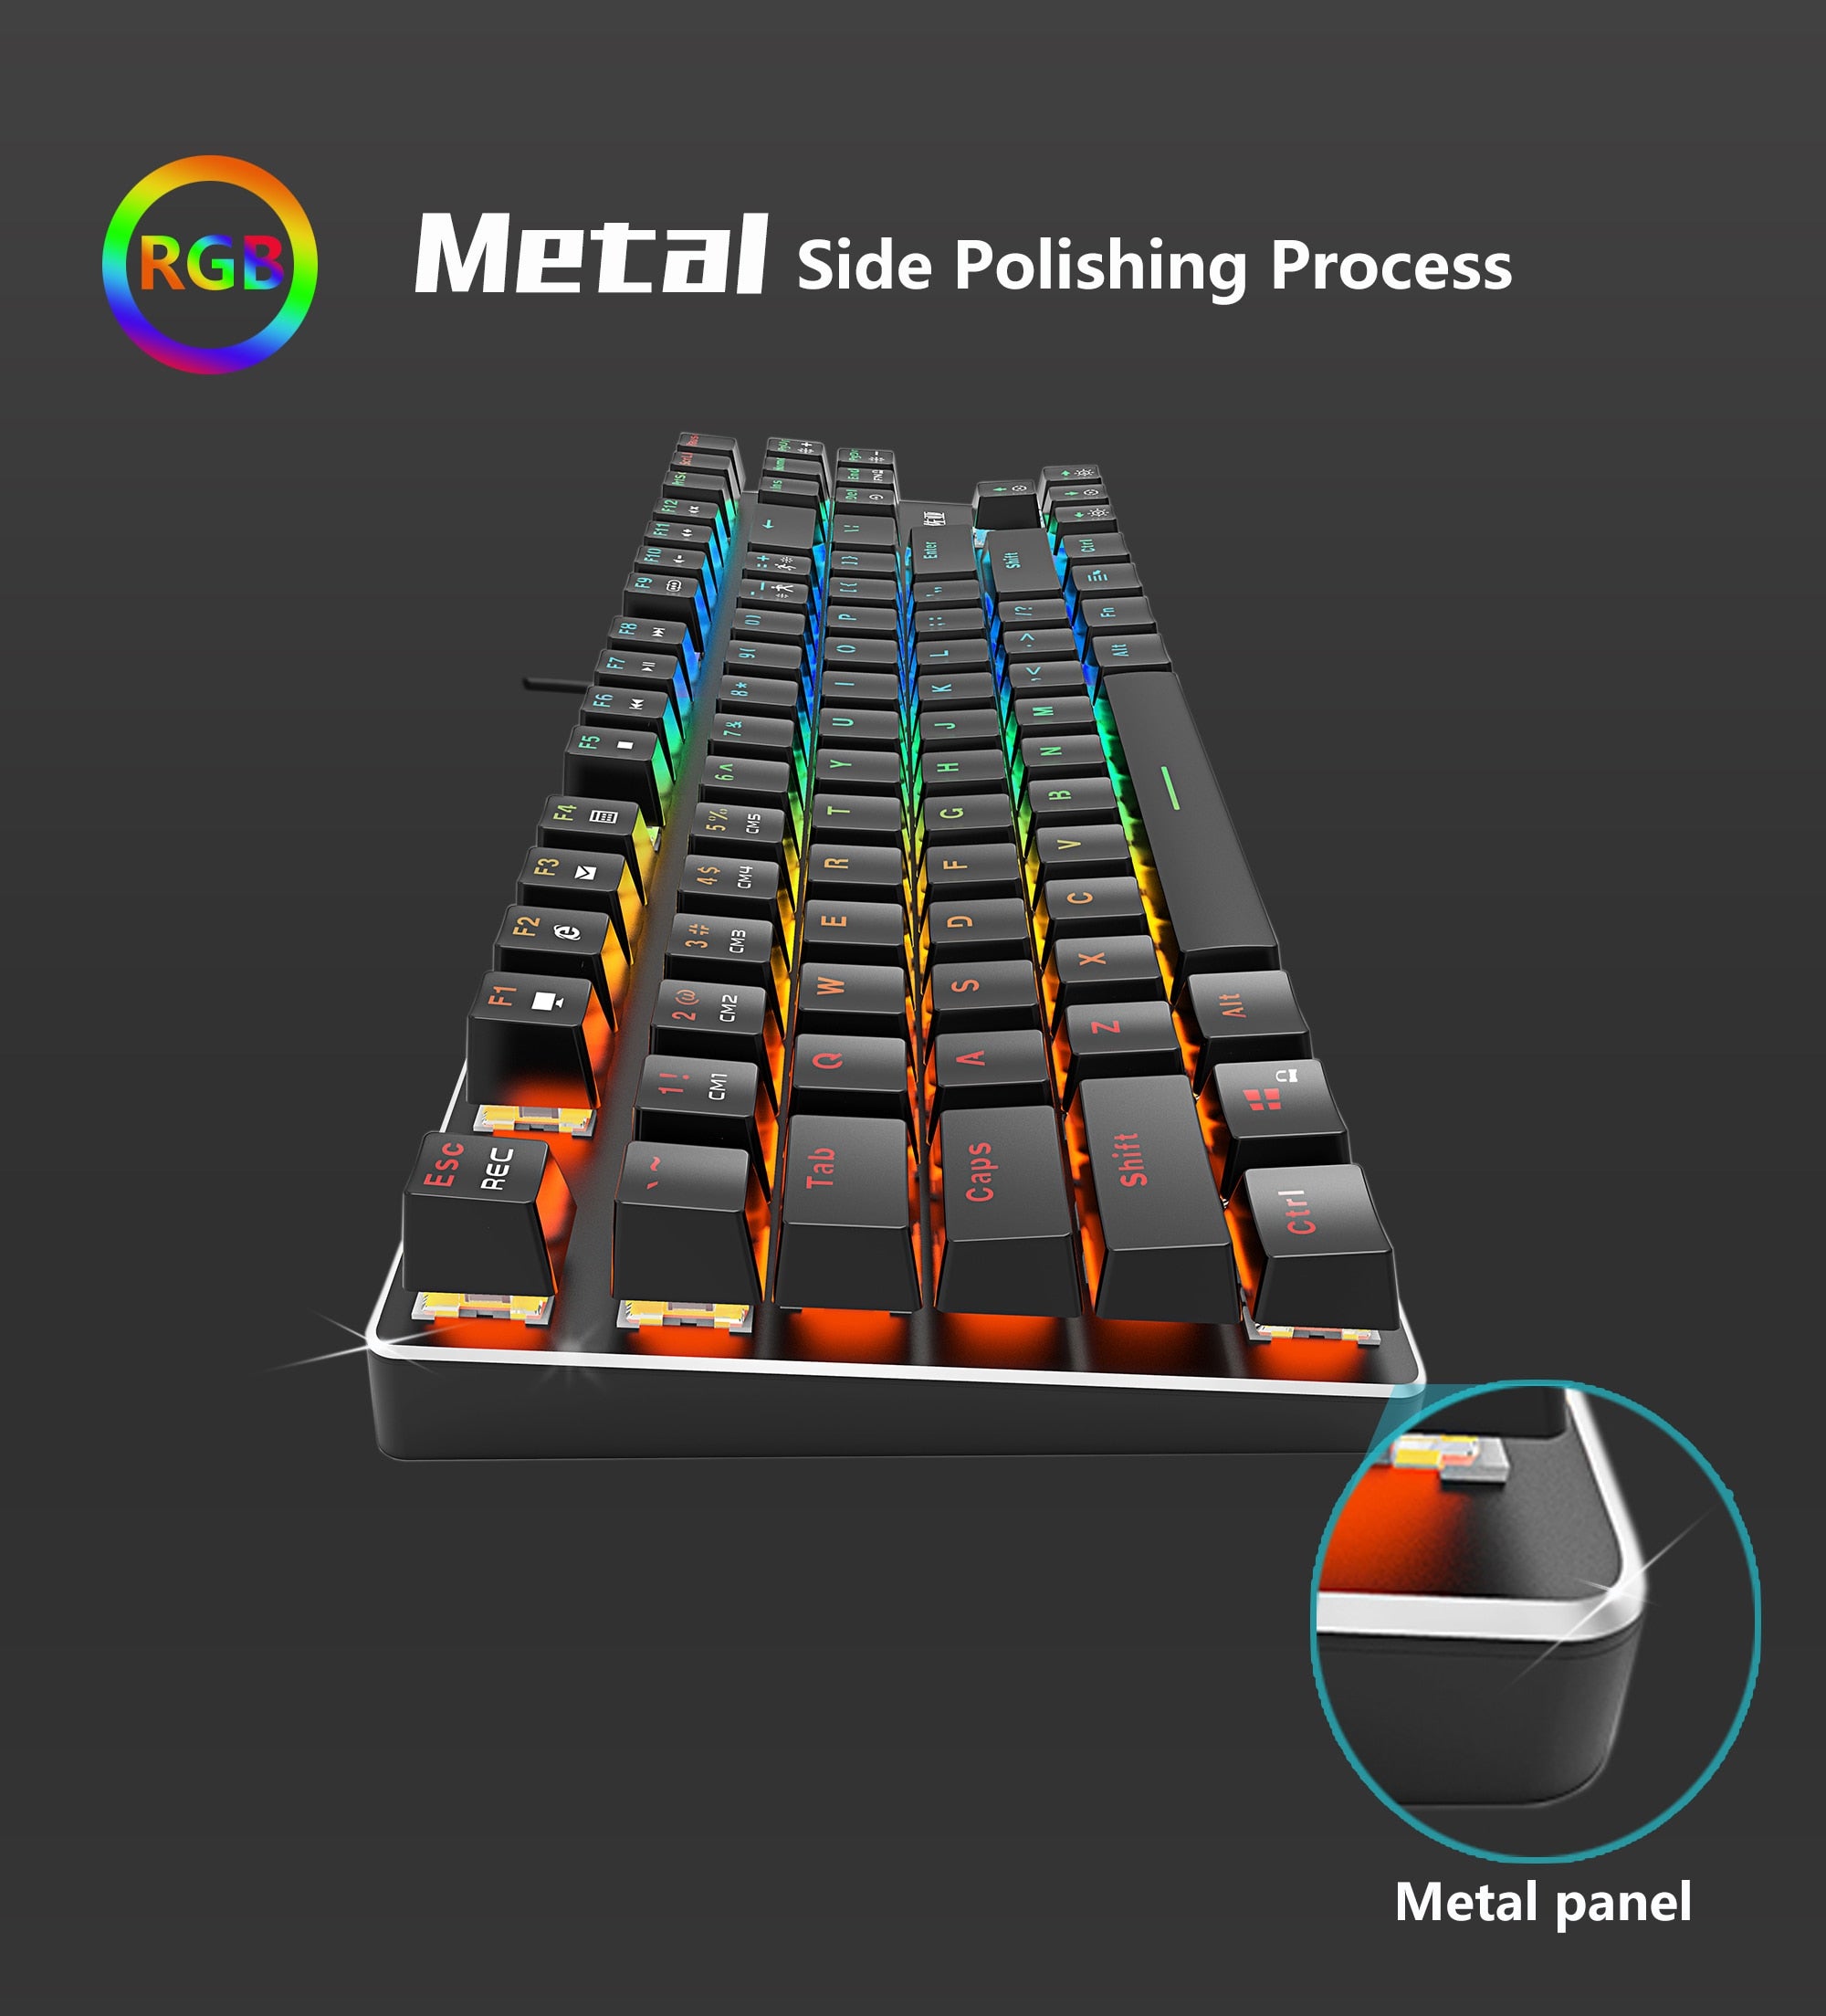 RGB Mix Backlit Wired Gaming Mechanical Keyboard